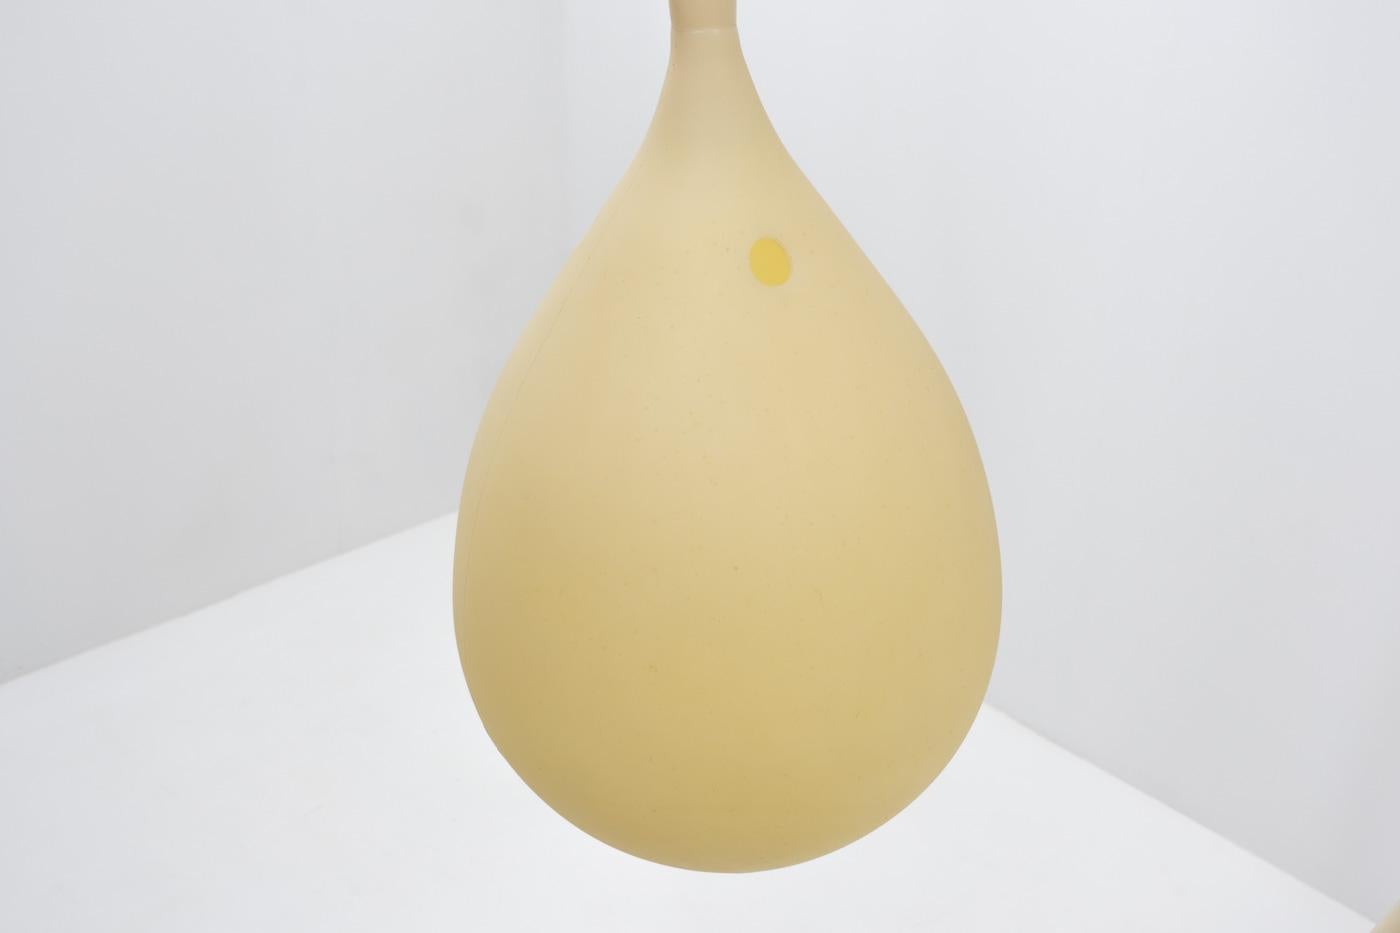 Rare Swiss Design Jingzi Ceiling Lamps, Herzog & De Meuron, for Belux, 2000s For Sale 1